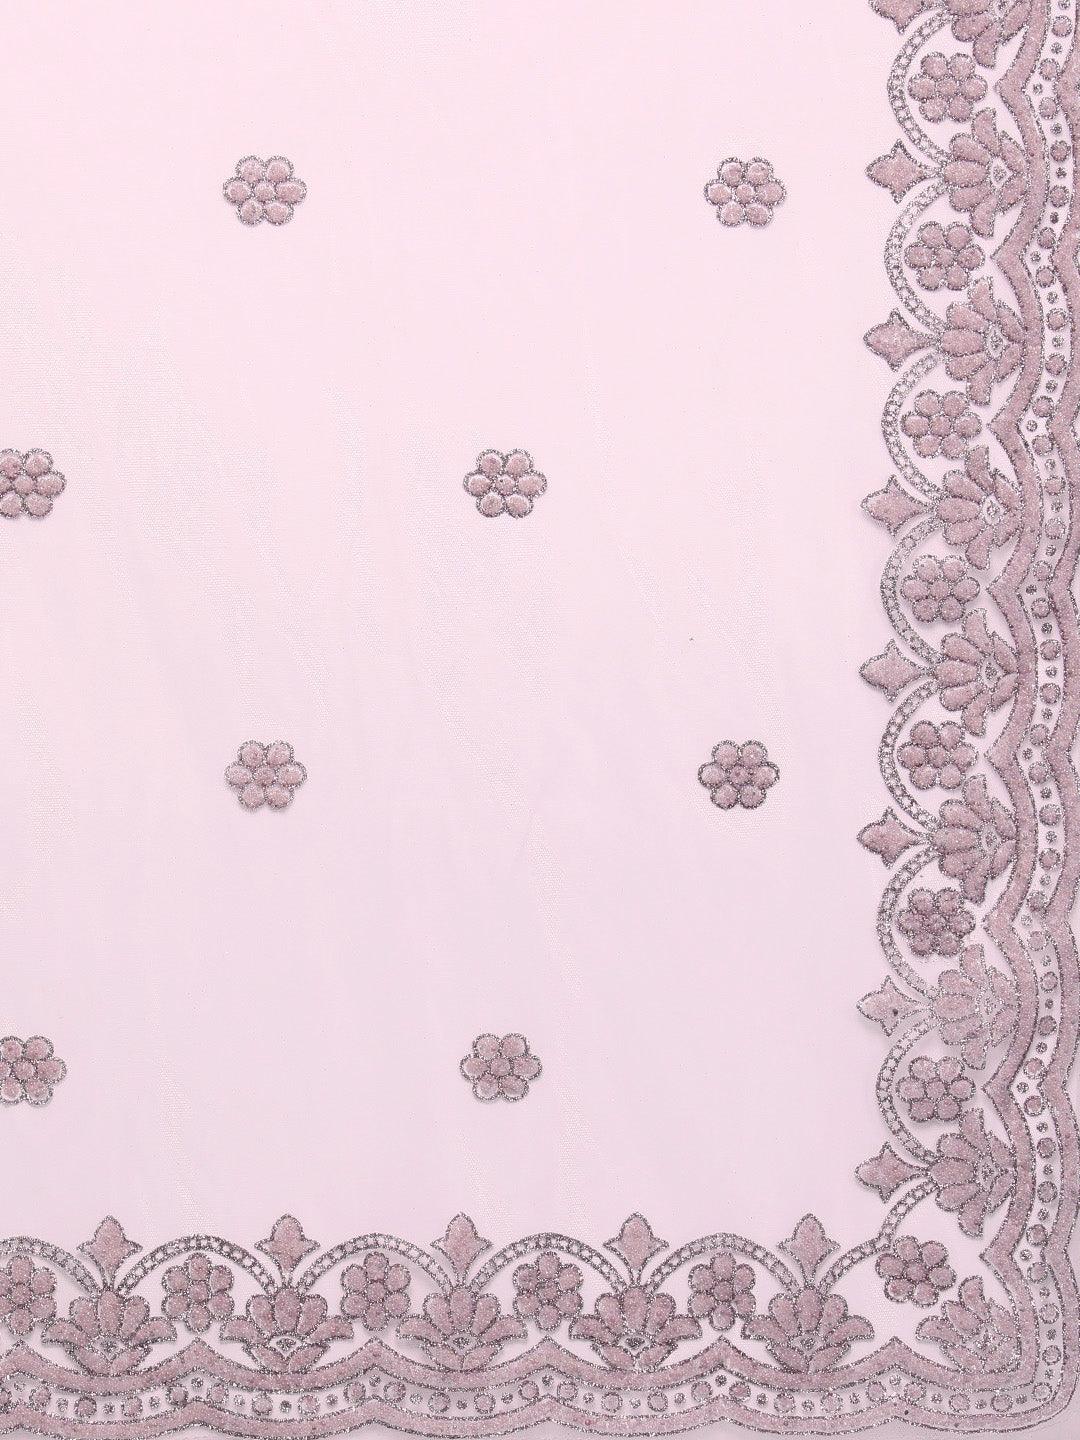 Libas Art Pink Embellished Net Gown Dress With Dupatta